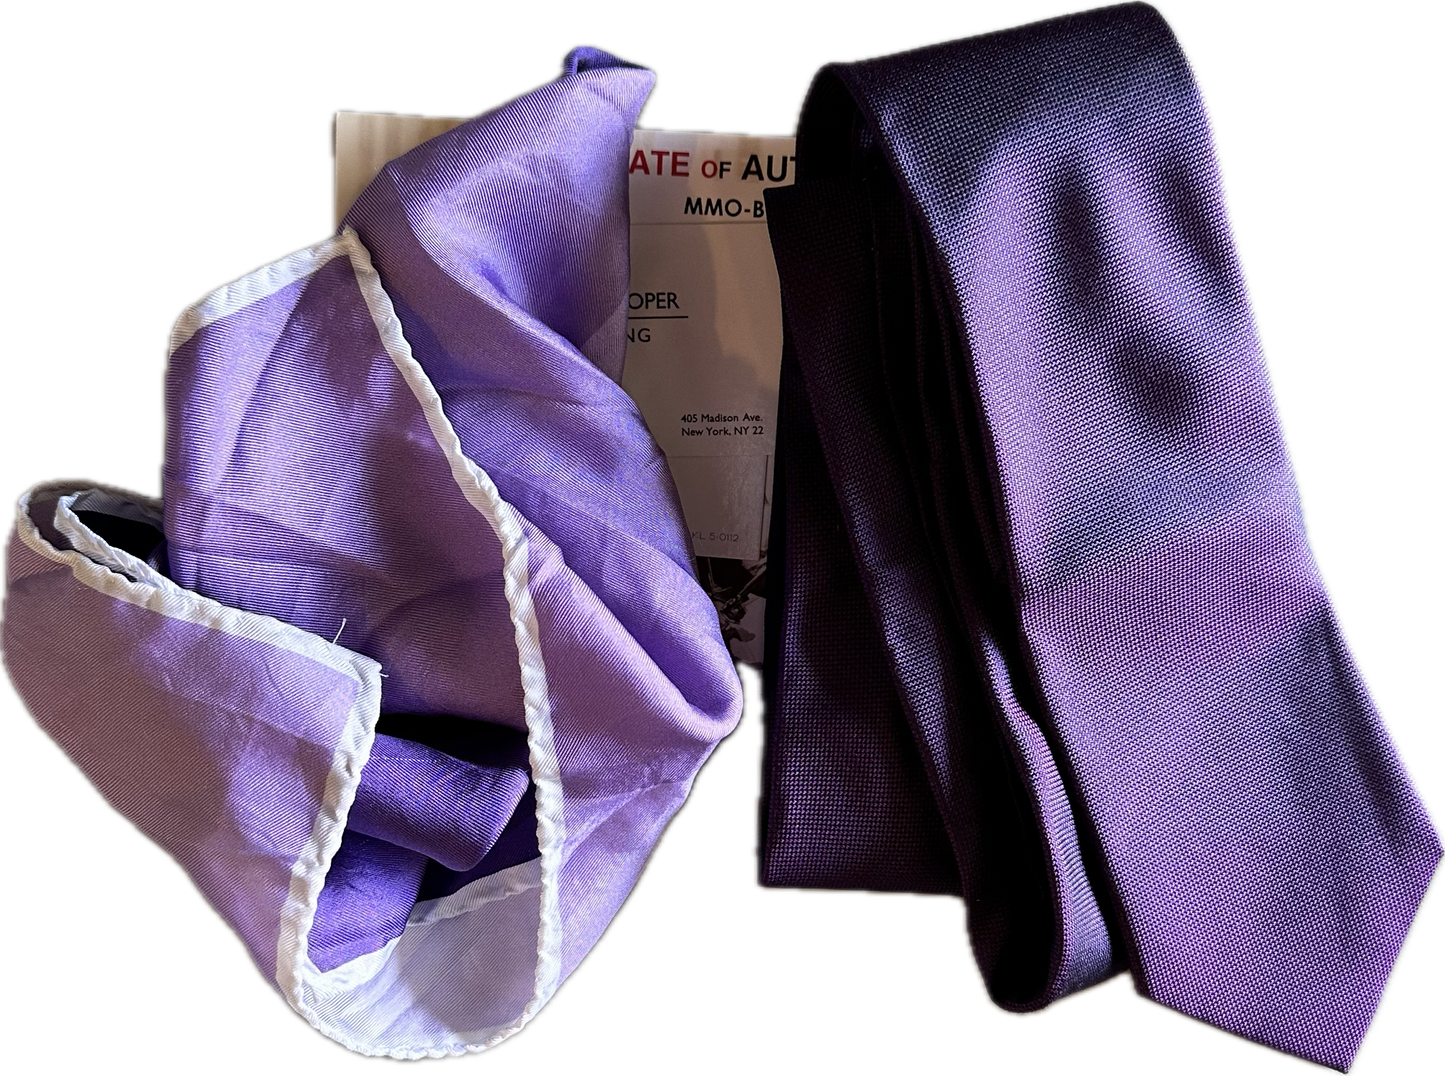 Mad Men: Roger Sterling's Purple Pocket square, Necktie and Sterling Cooper Business Card